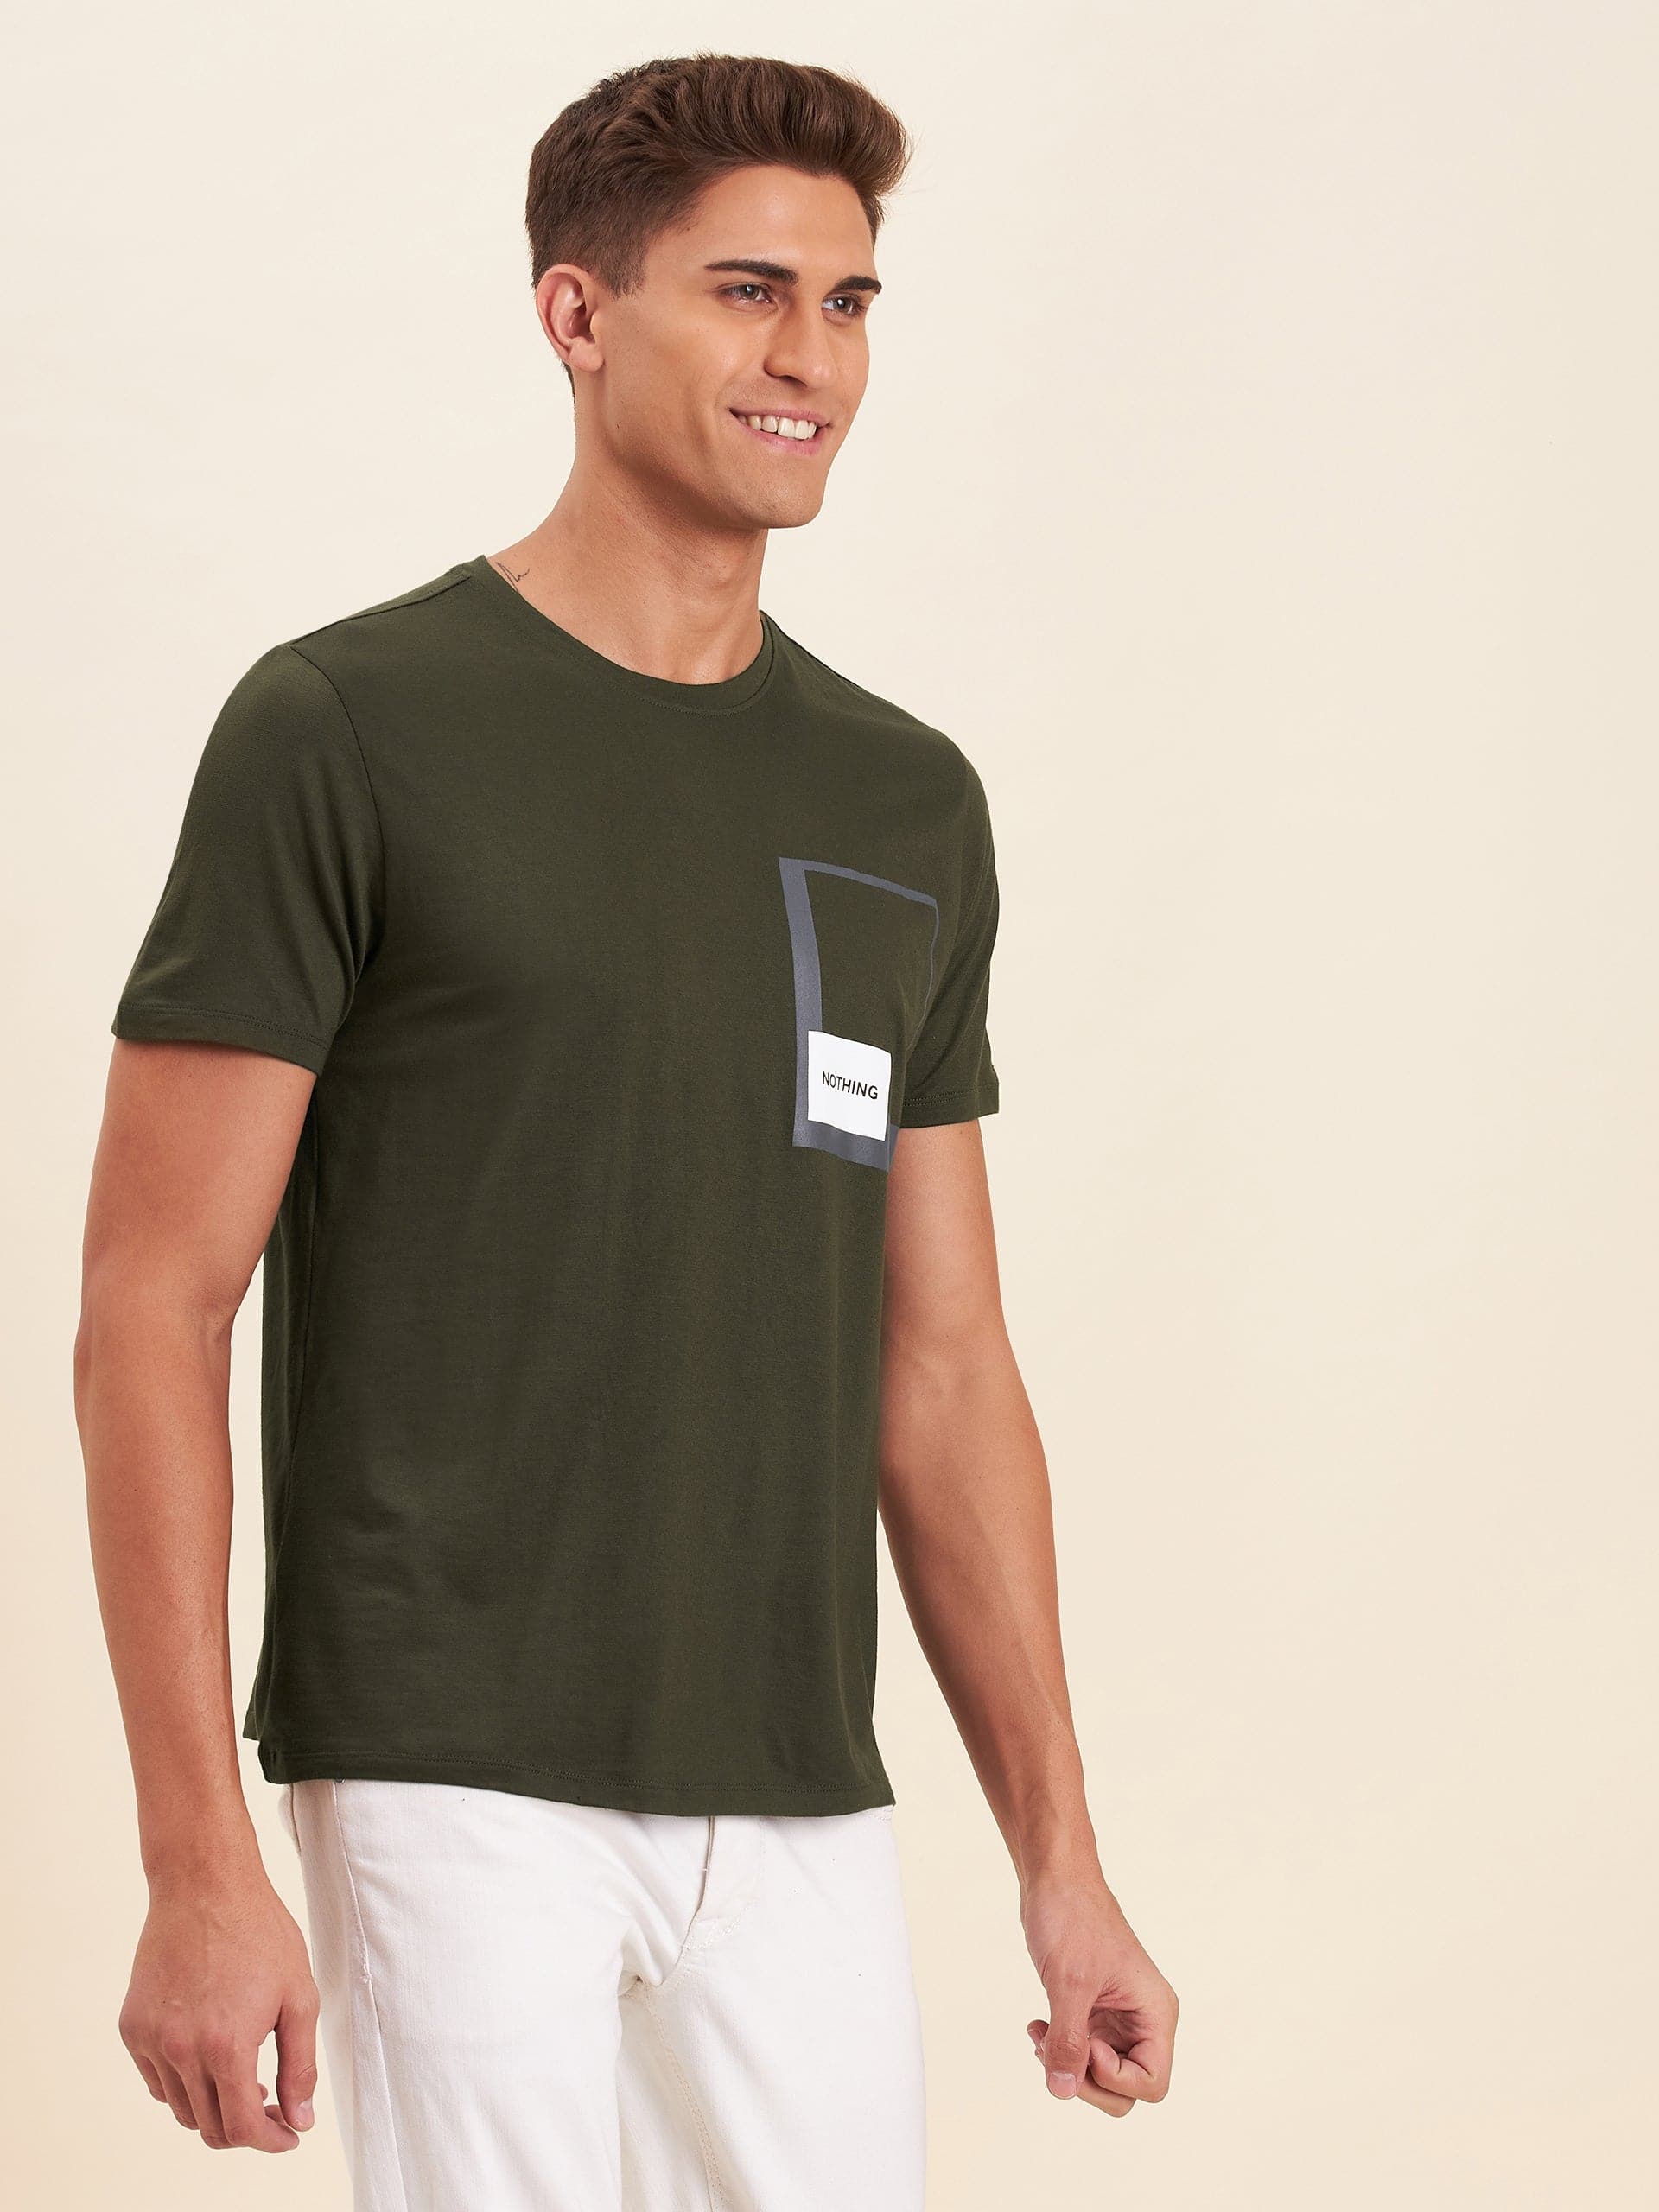 Men's Olive Viscose NOTHING T-Shirt - LYUSH-MASCLN